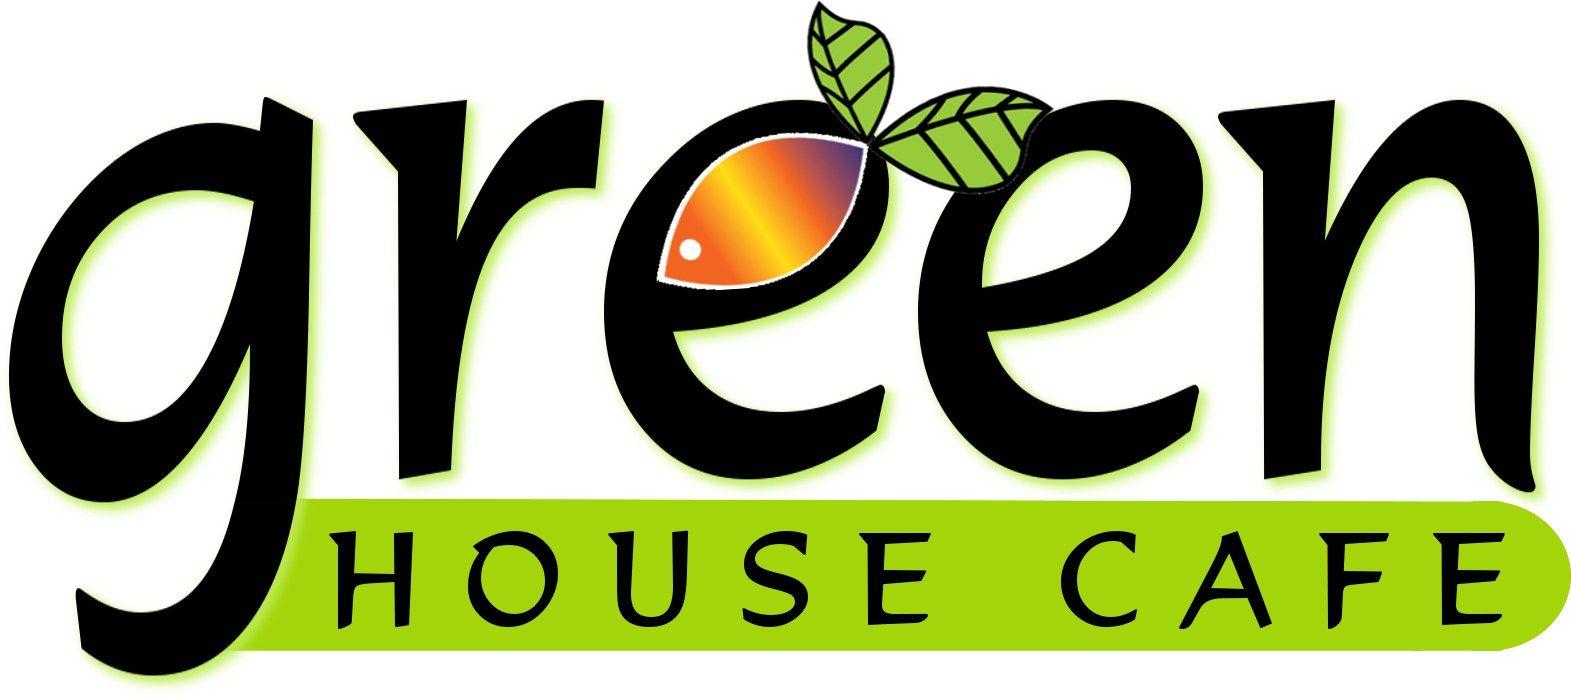 Greenhouse Logo - Greenhouse Logo W O Background New Copy. Green House Cafe